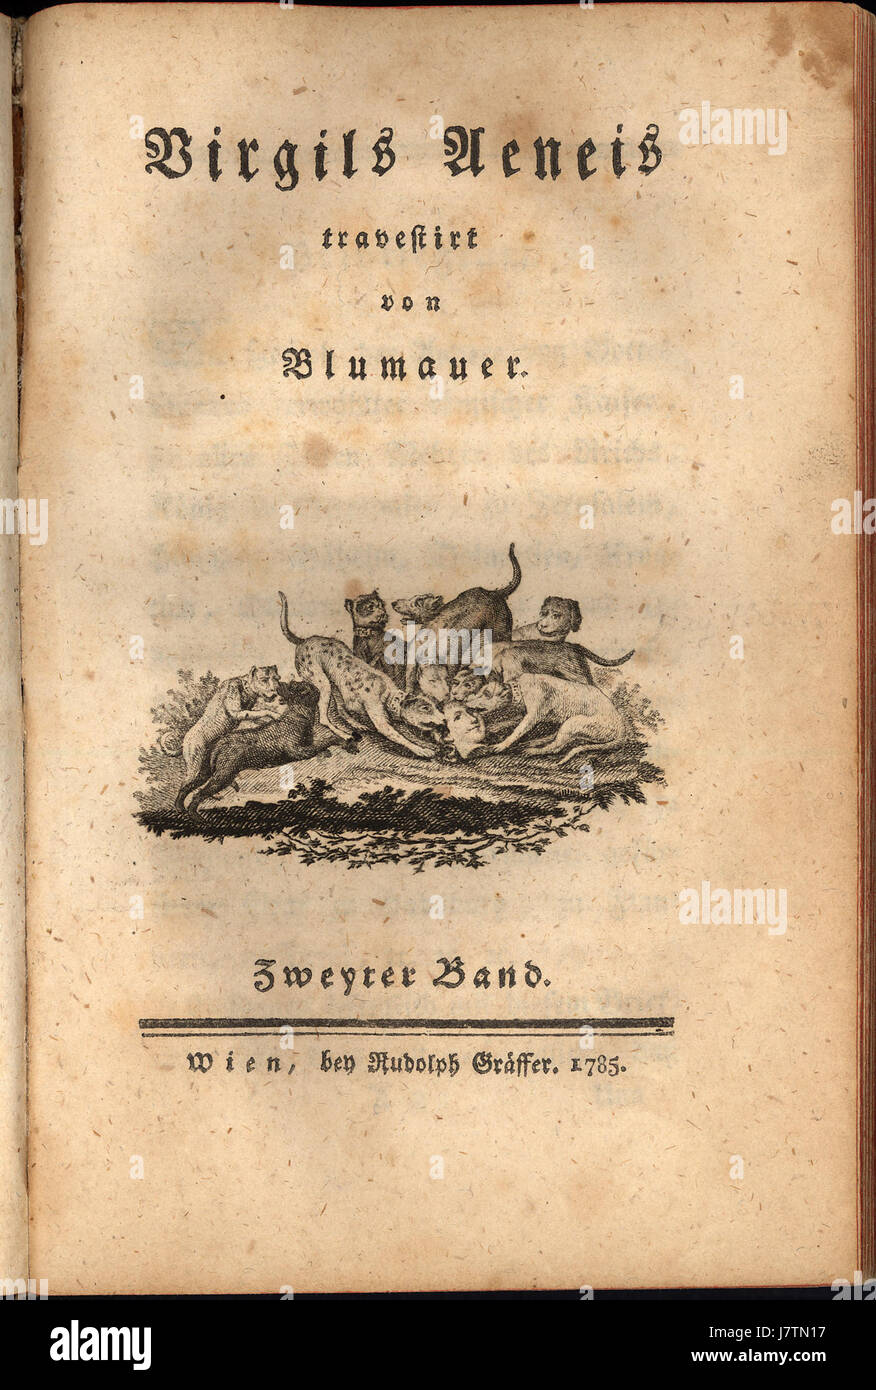 Blumauer, Virgils Aeneis travestiert, vol. 2 (Vienna 1785), title page Stock Photo